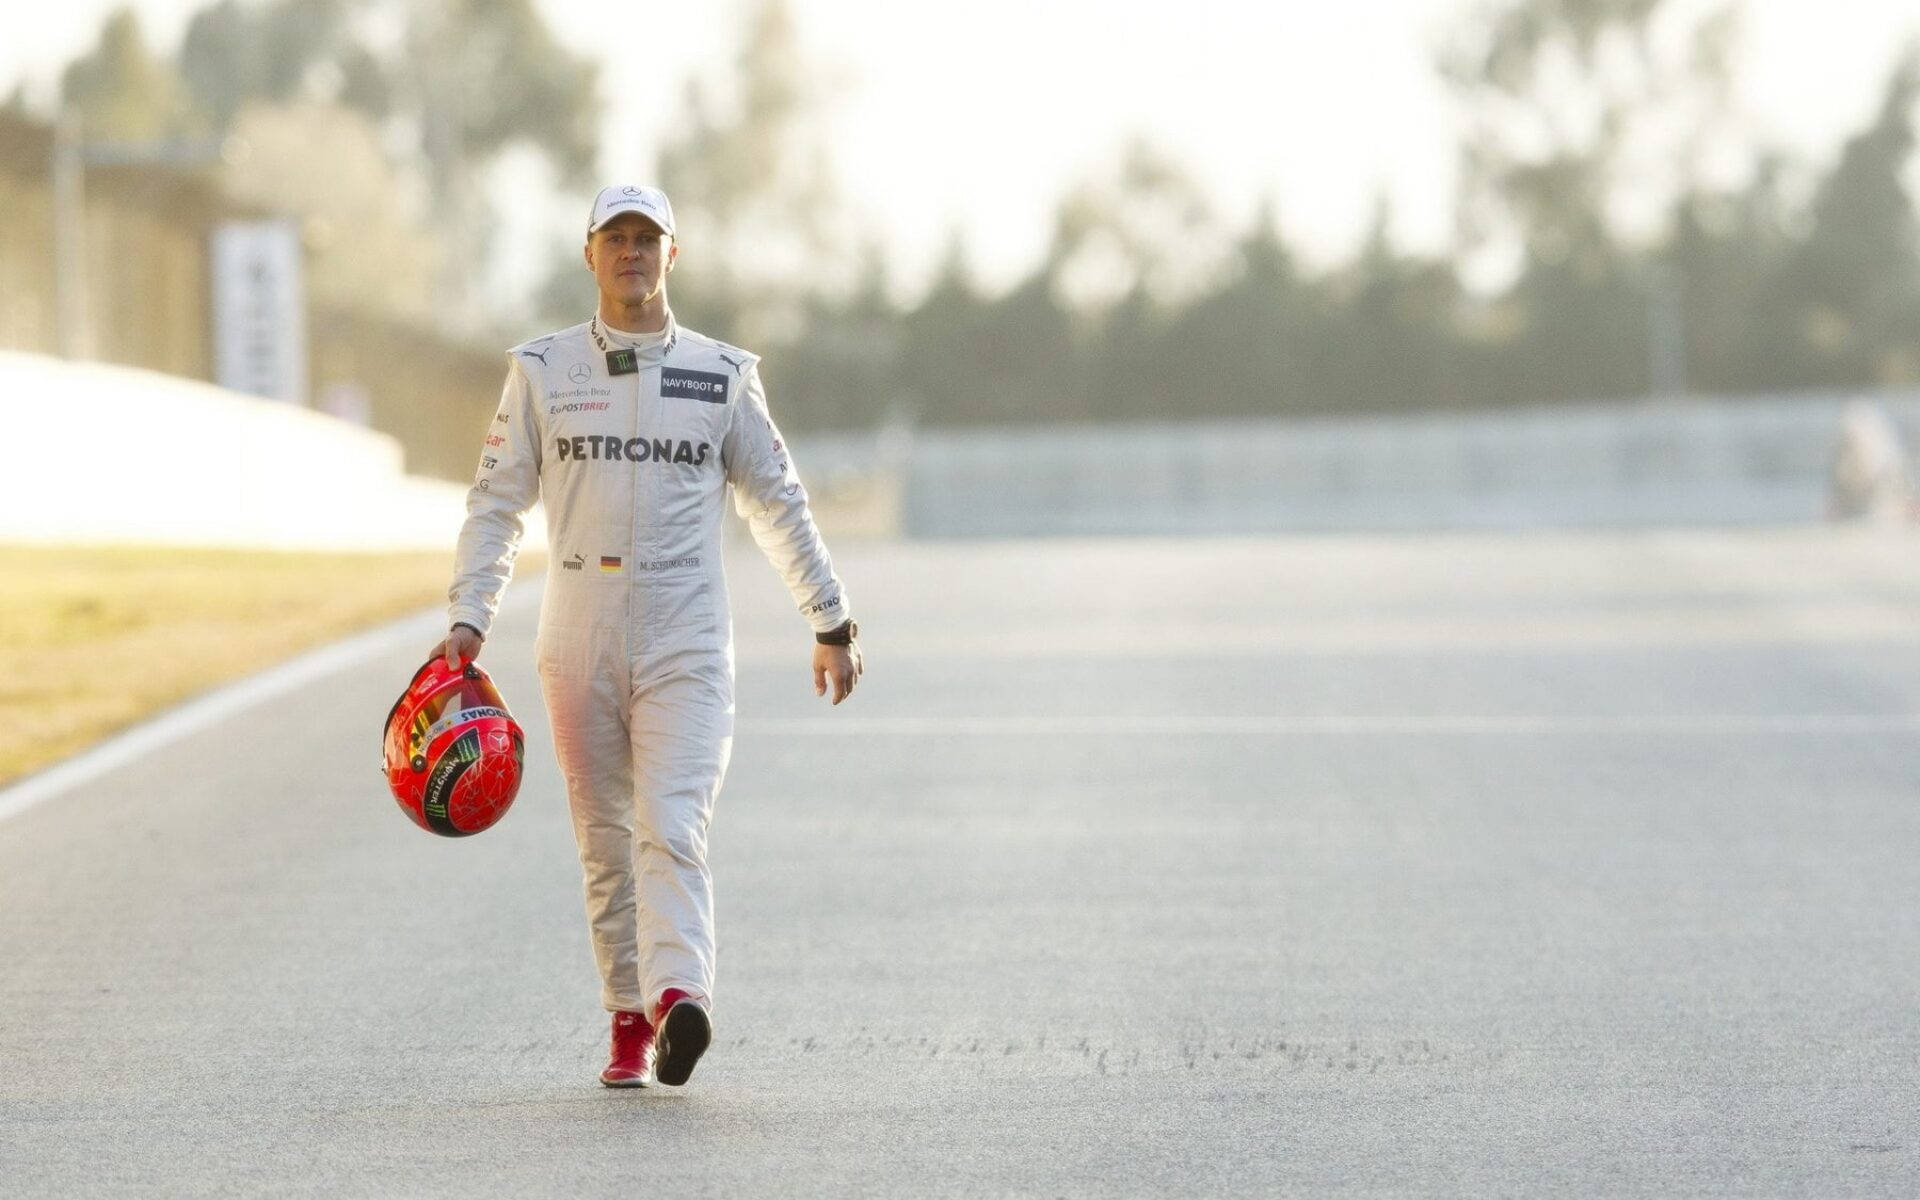 All-white Petronas Michael Schumacher Background